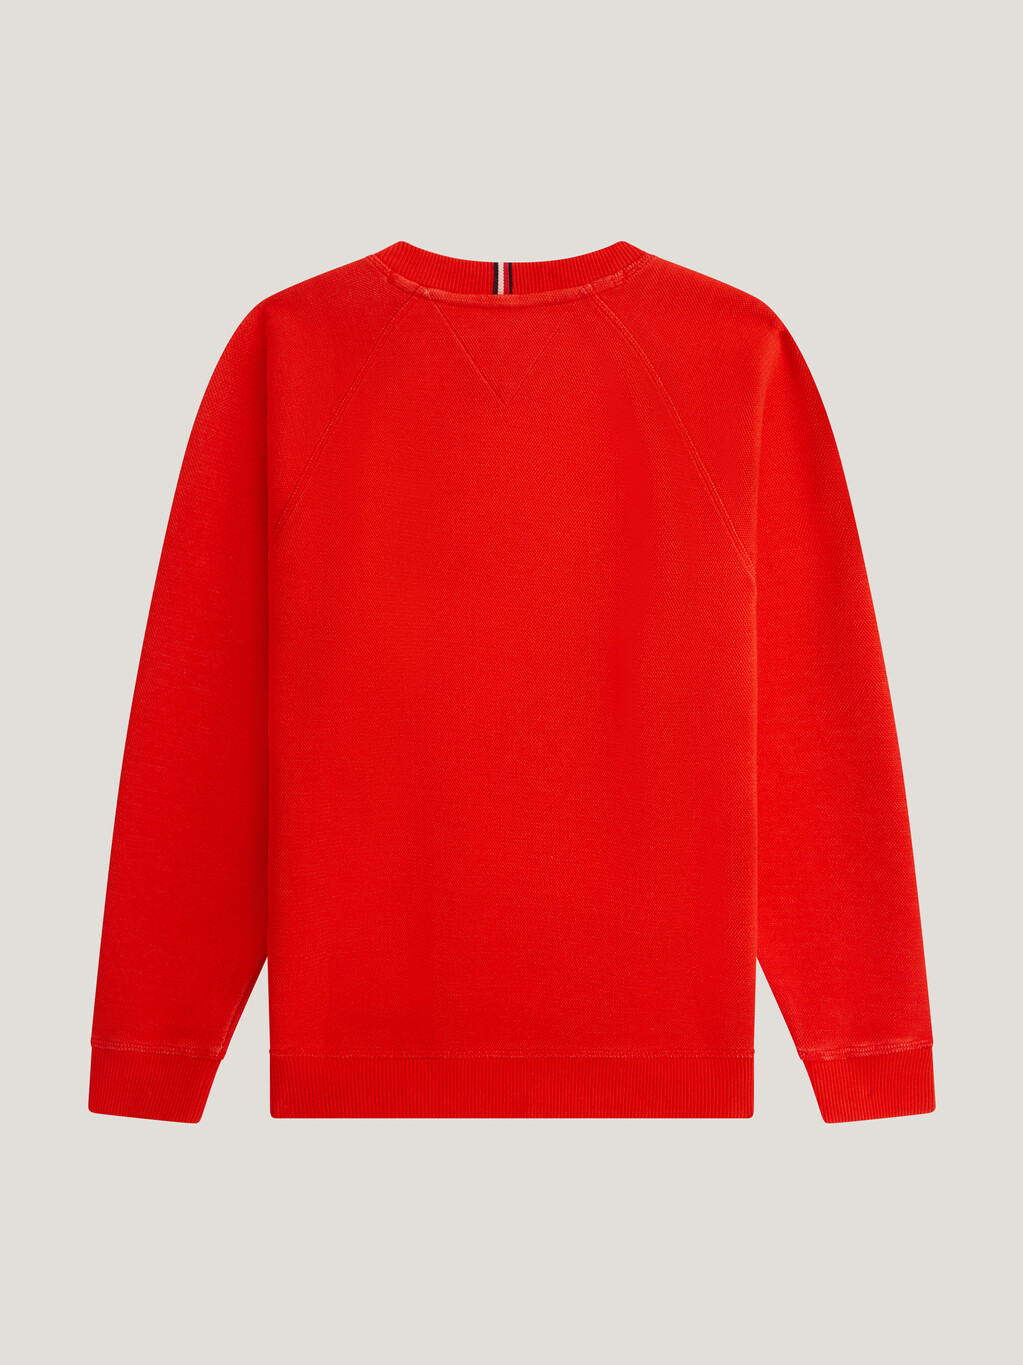 Boys Crest Embroidery Sweatshirt, Fierce Red, hi-res